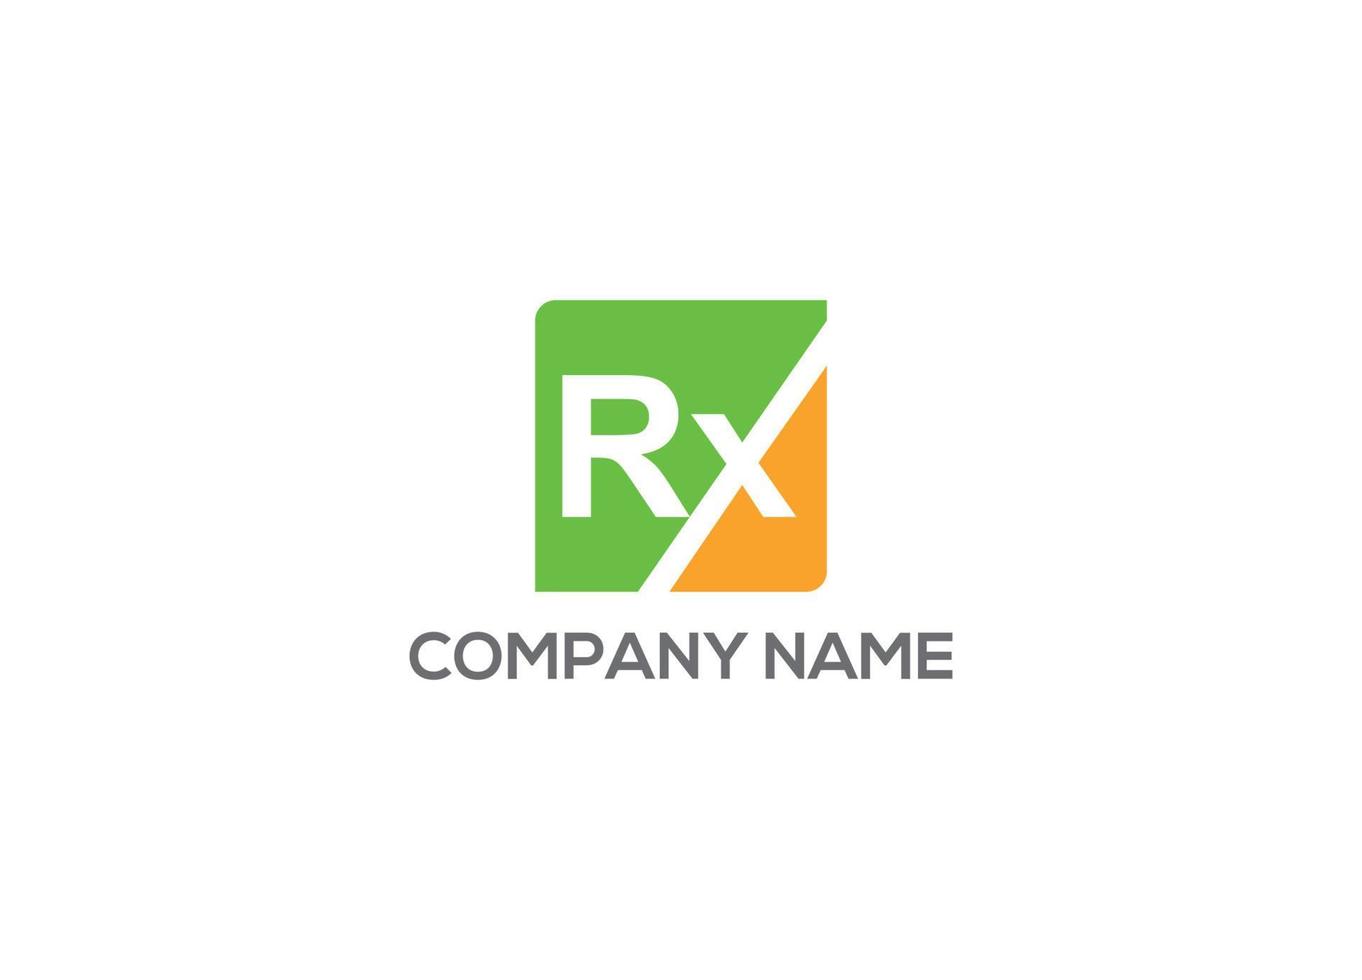 RX initial logo design vector icon template